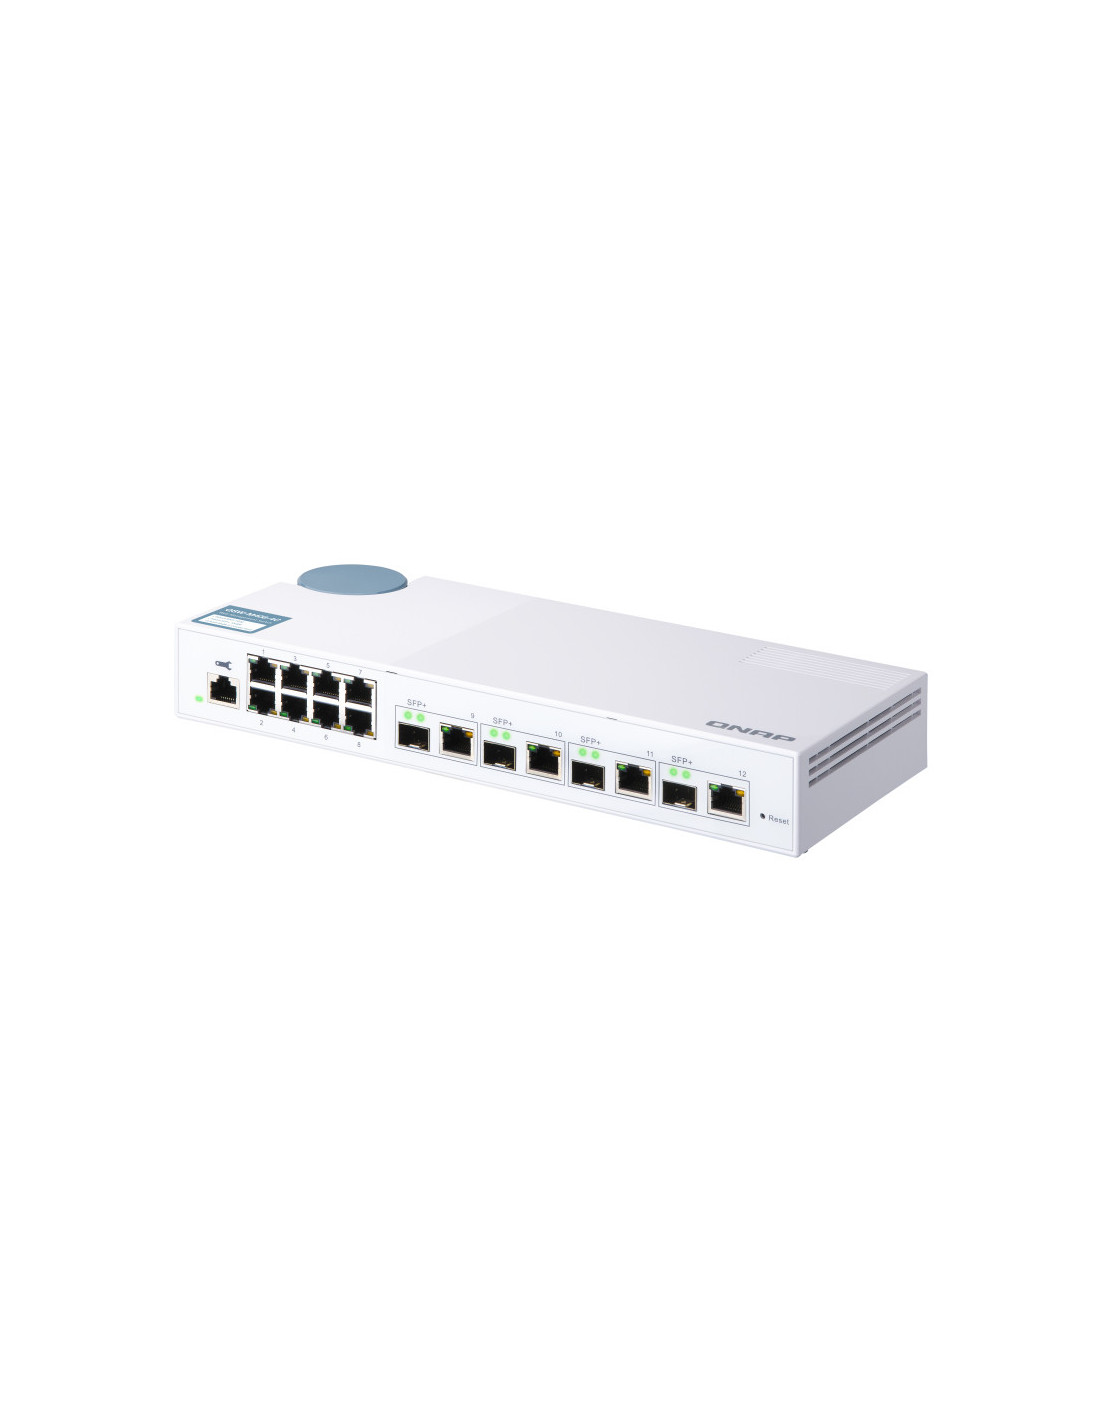  QSW-M408-4C Switch 10GbE - 12 puertos (8 RJ45, 4 combo SFP+ RJ45), agregación de puertos 802.3ad